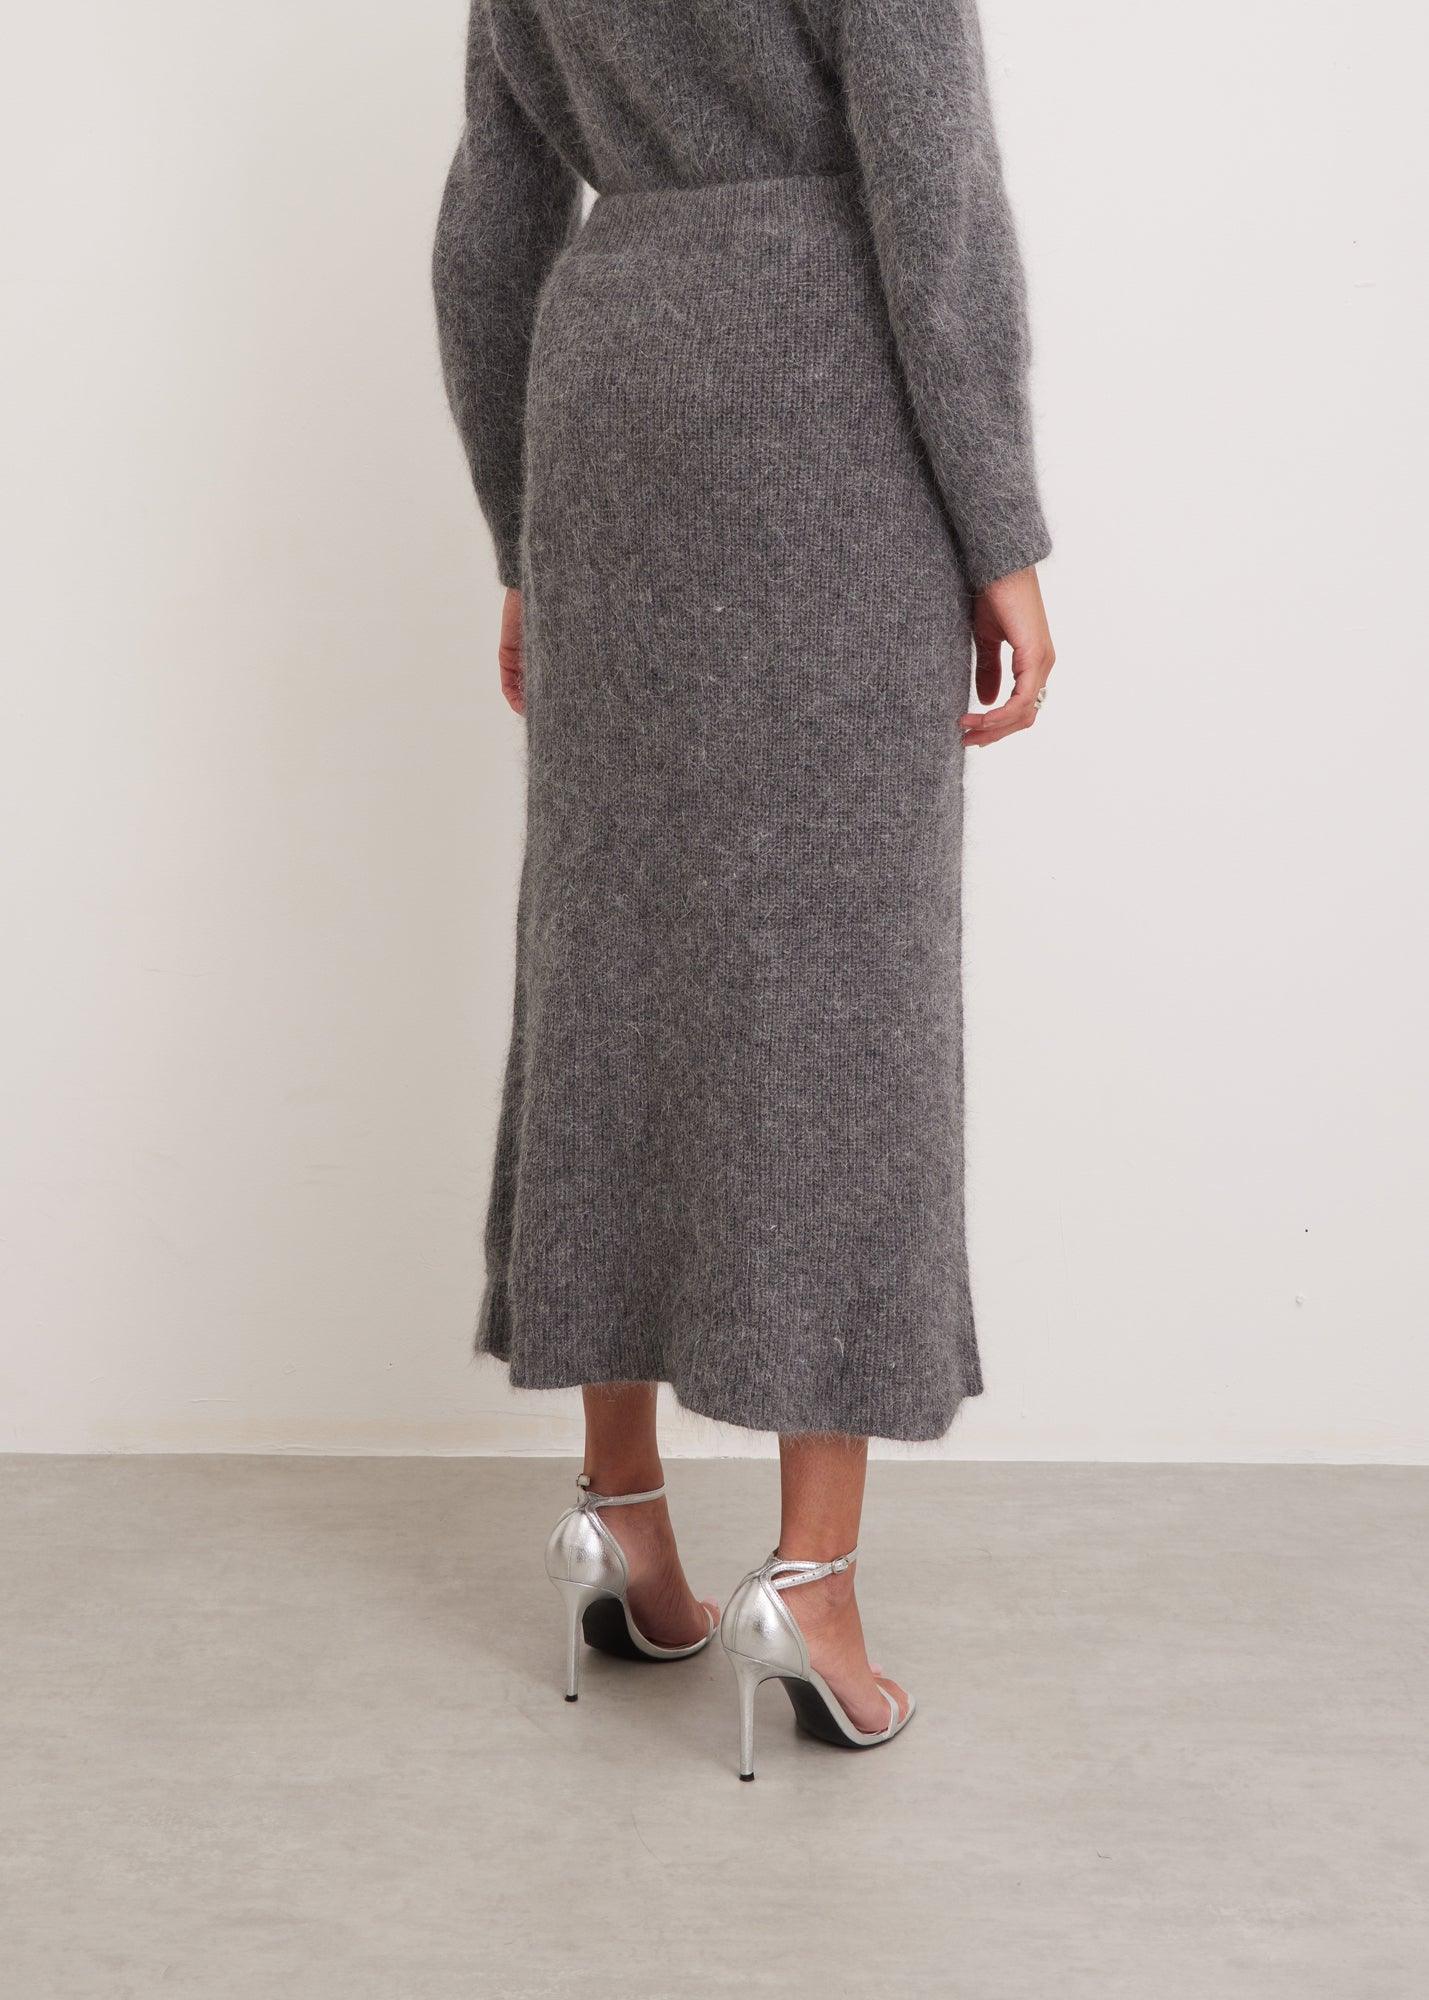 KNITEL grey angora skirt - SONI London